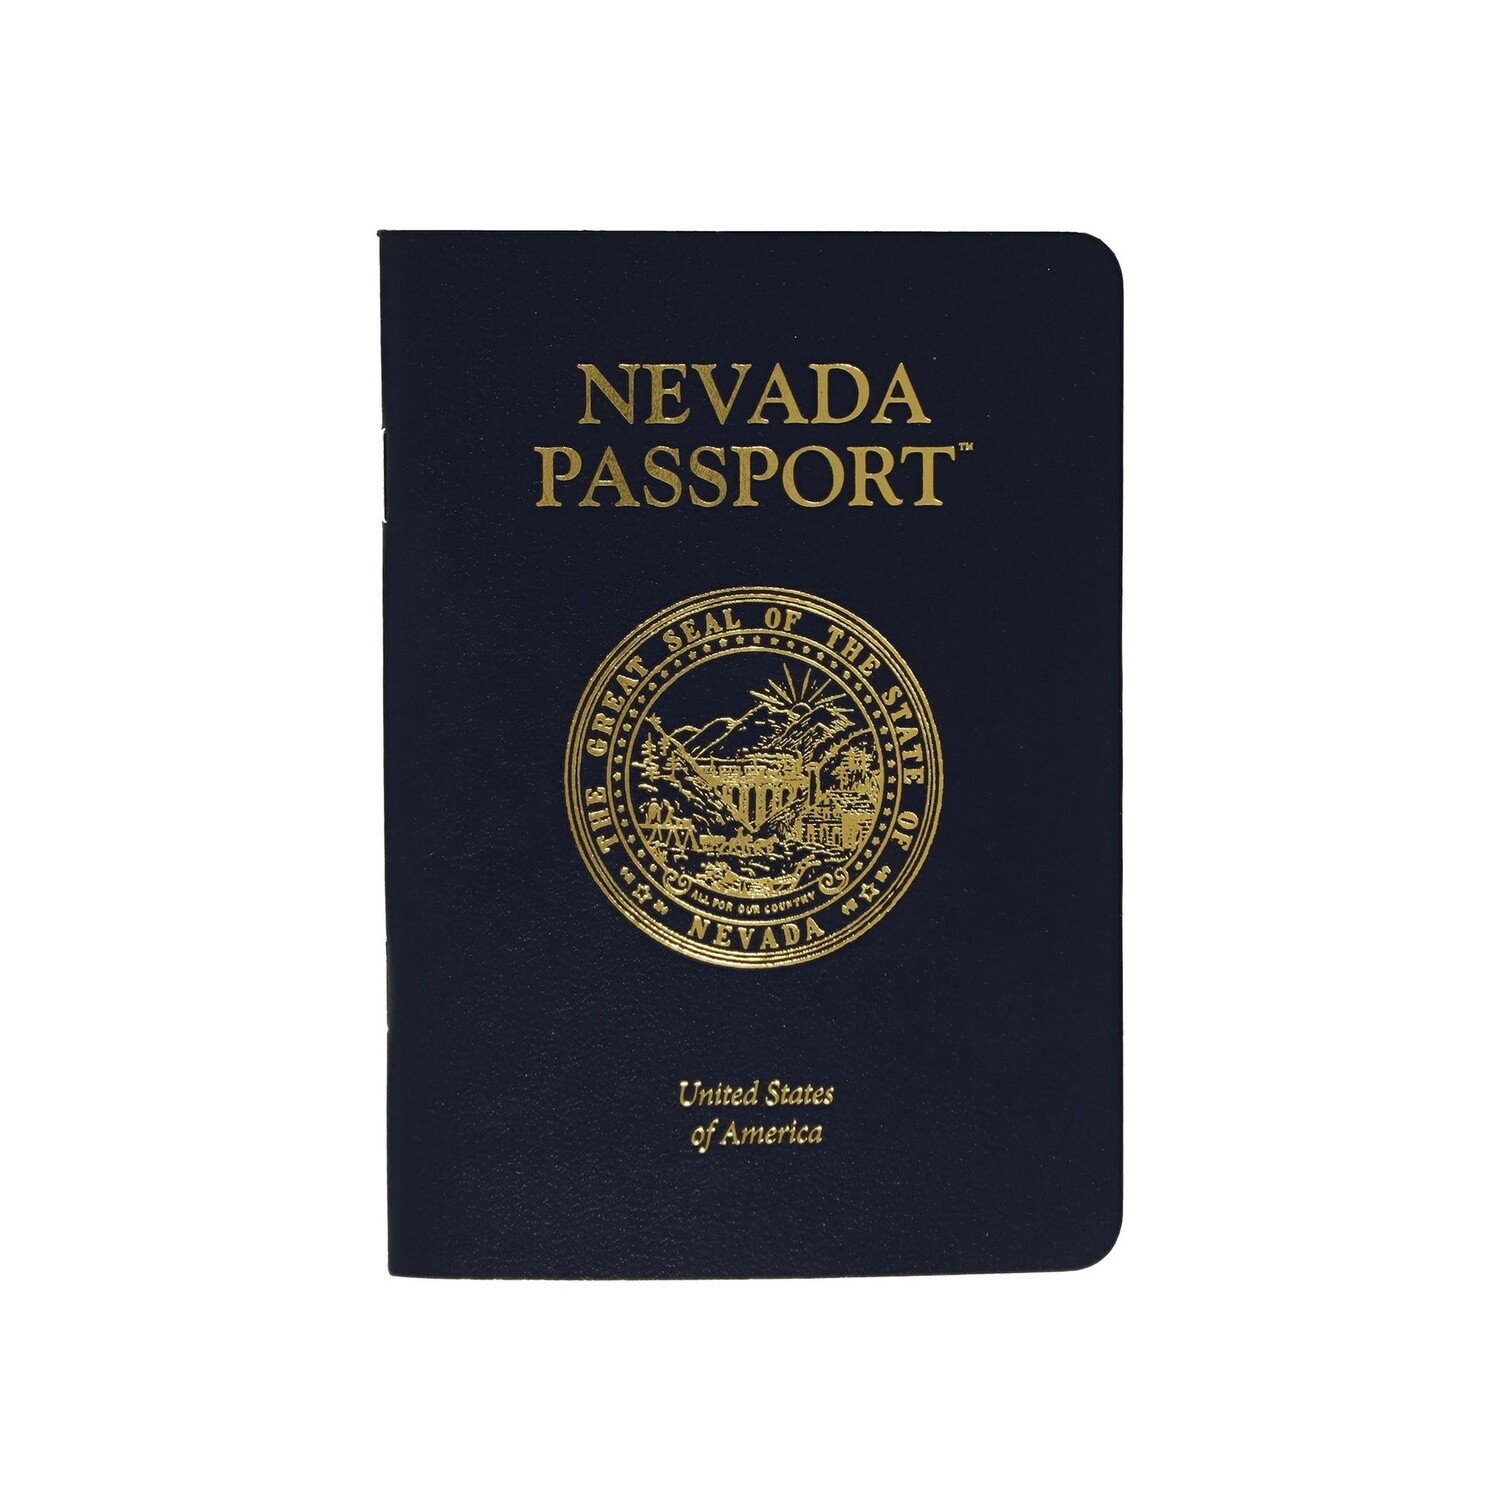 Nevada Passport by Sam Toll